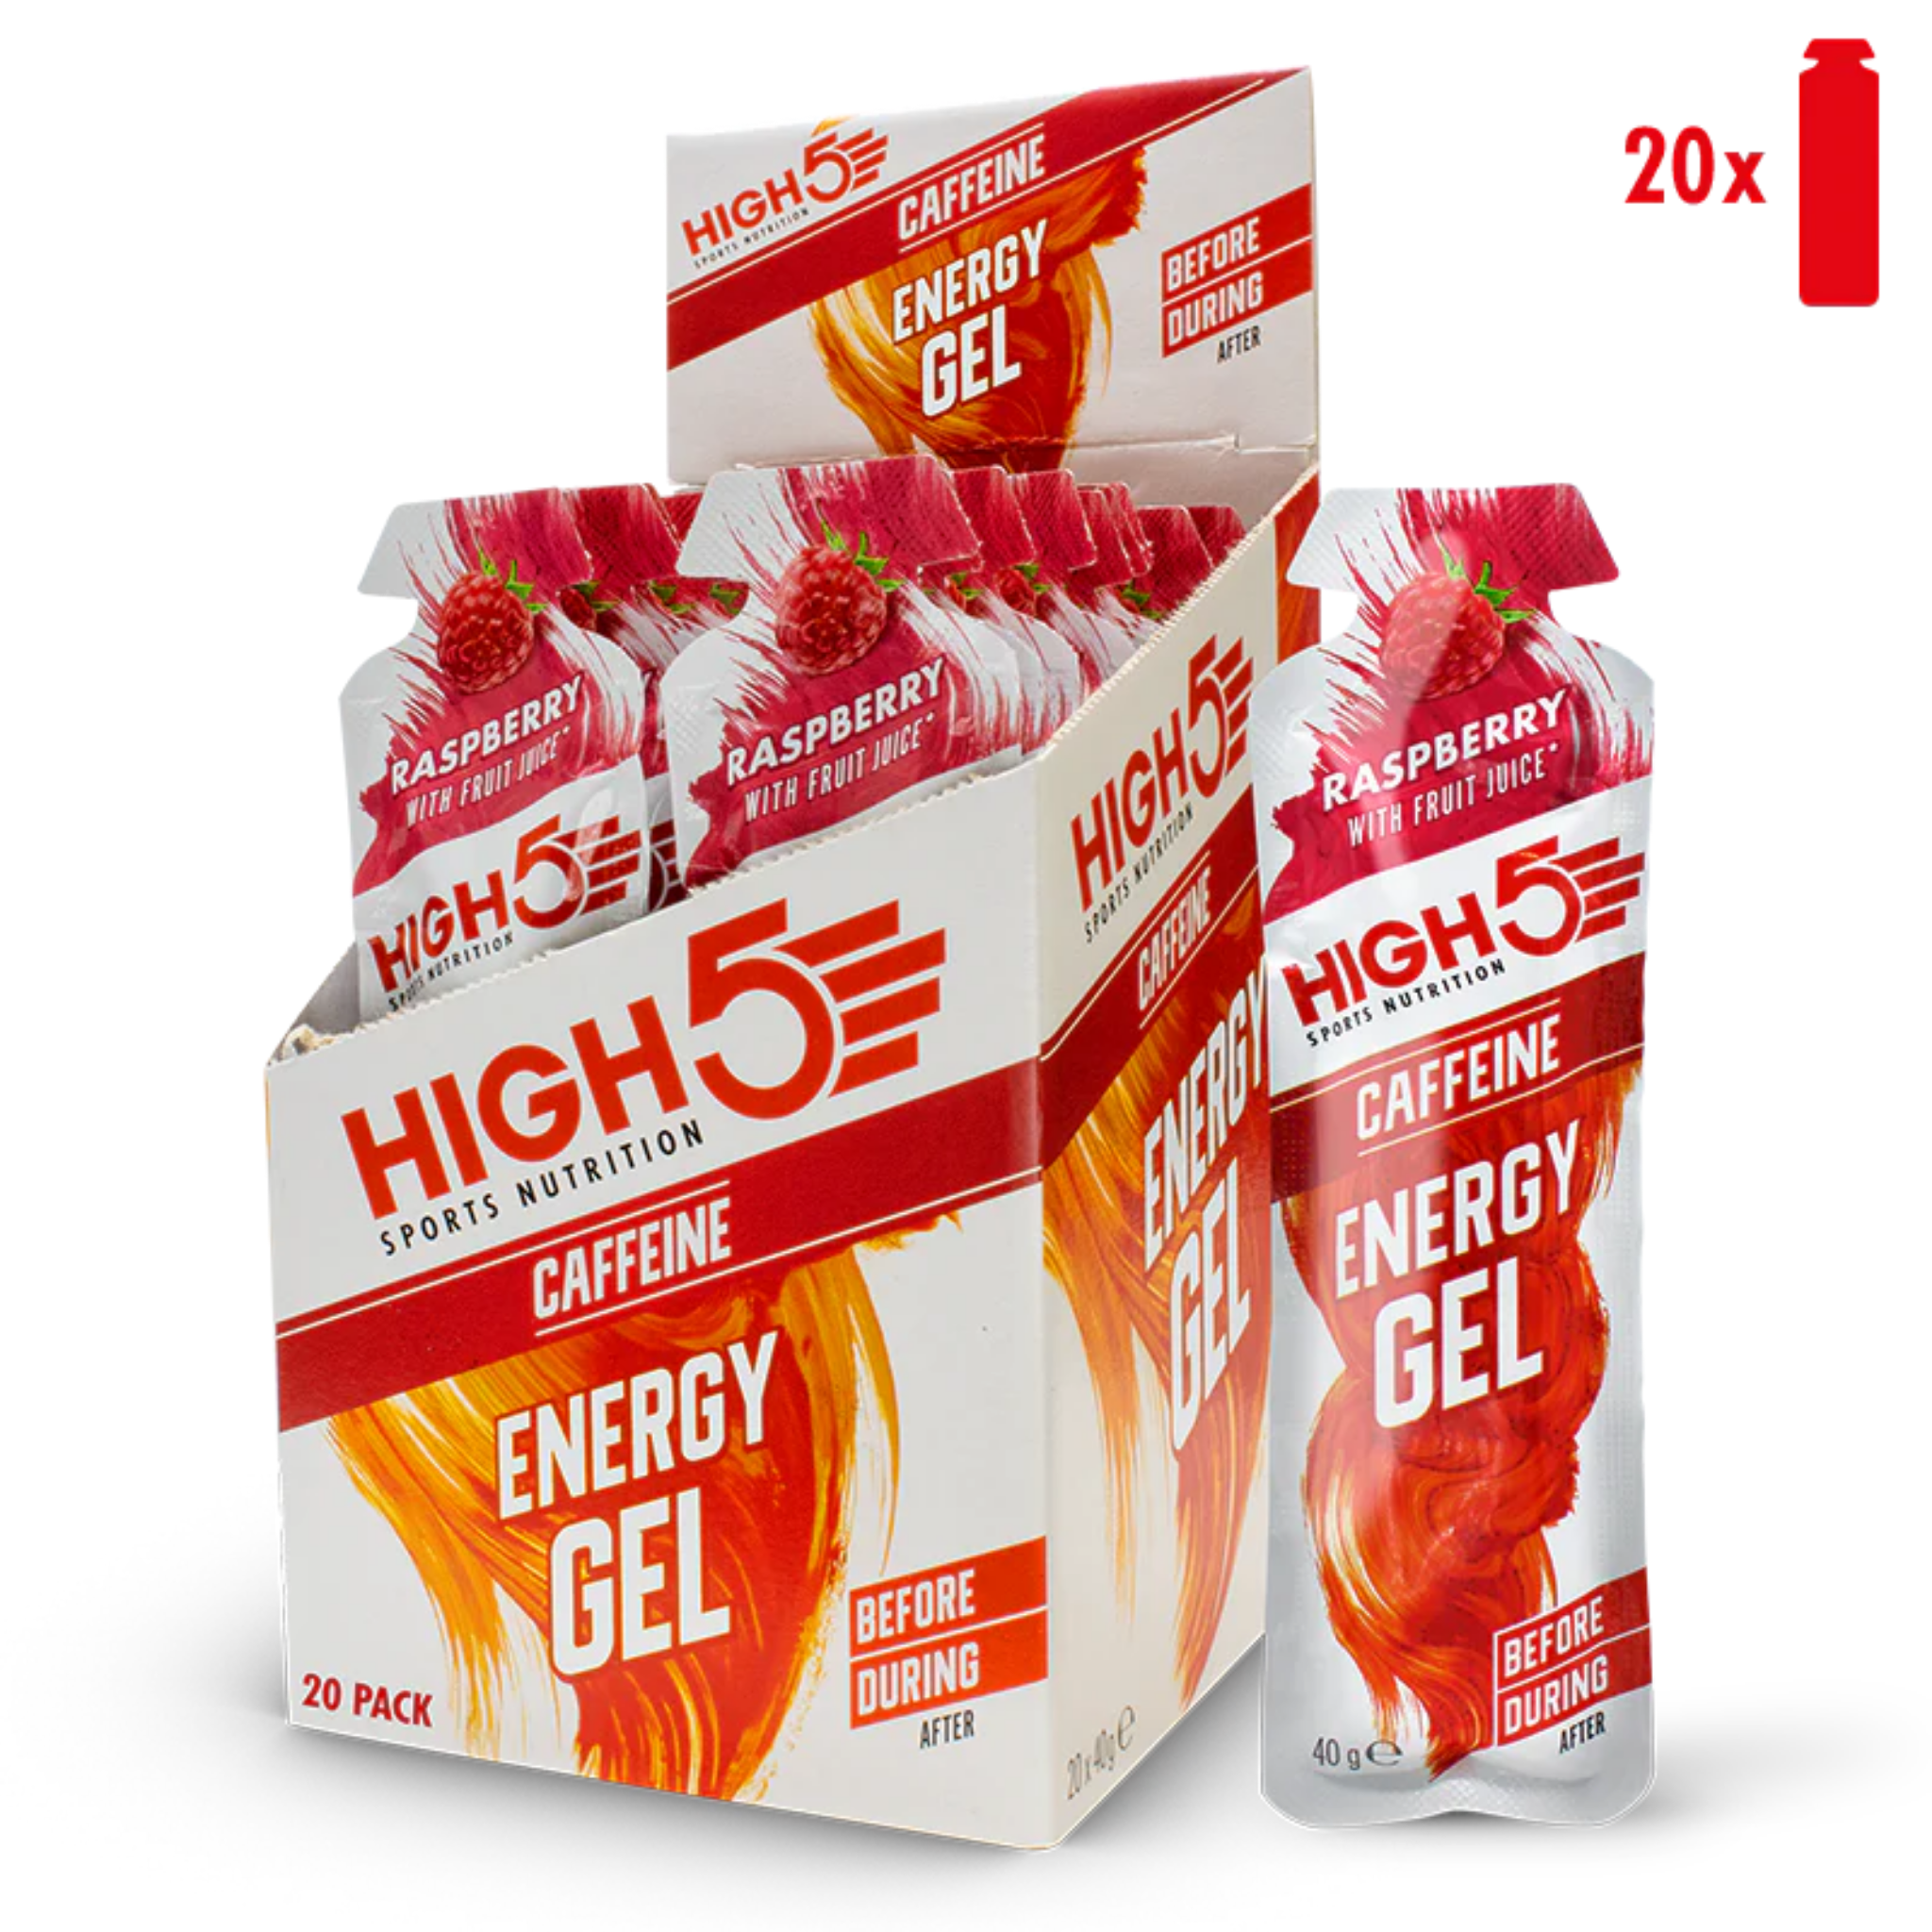 High5 Energigel Koffein Raspberry 40 g x 20 stk.